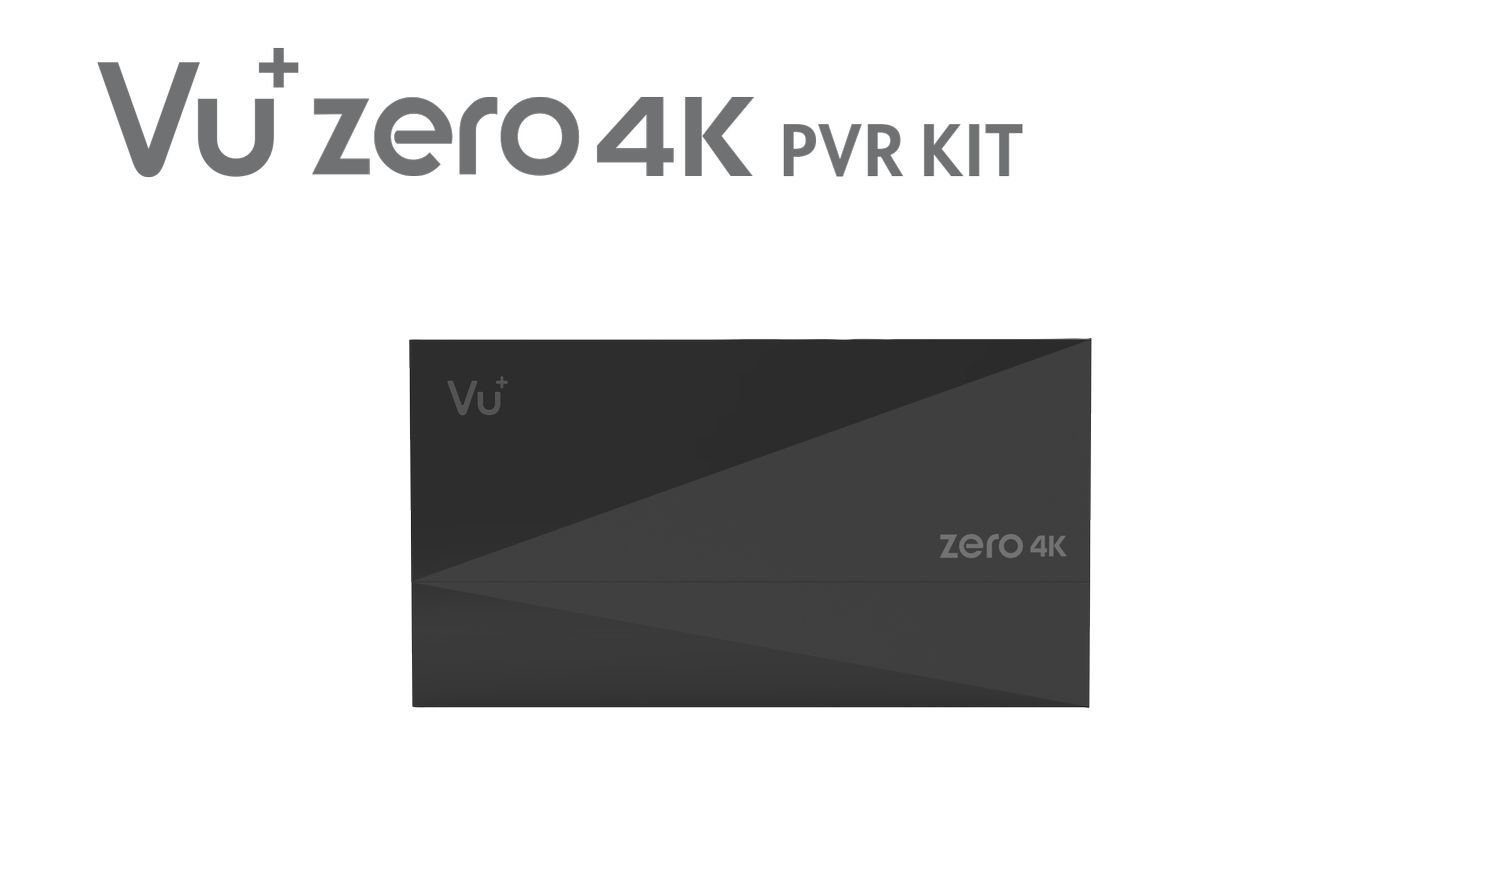 Zero 4K 2TB, Tuner Kit HDD, VU+ schwarz VU+ Inklusive PVR